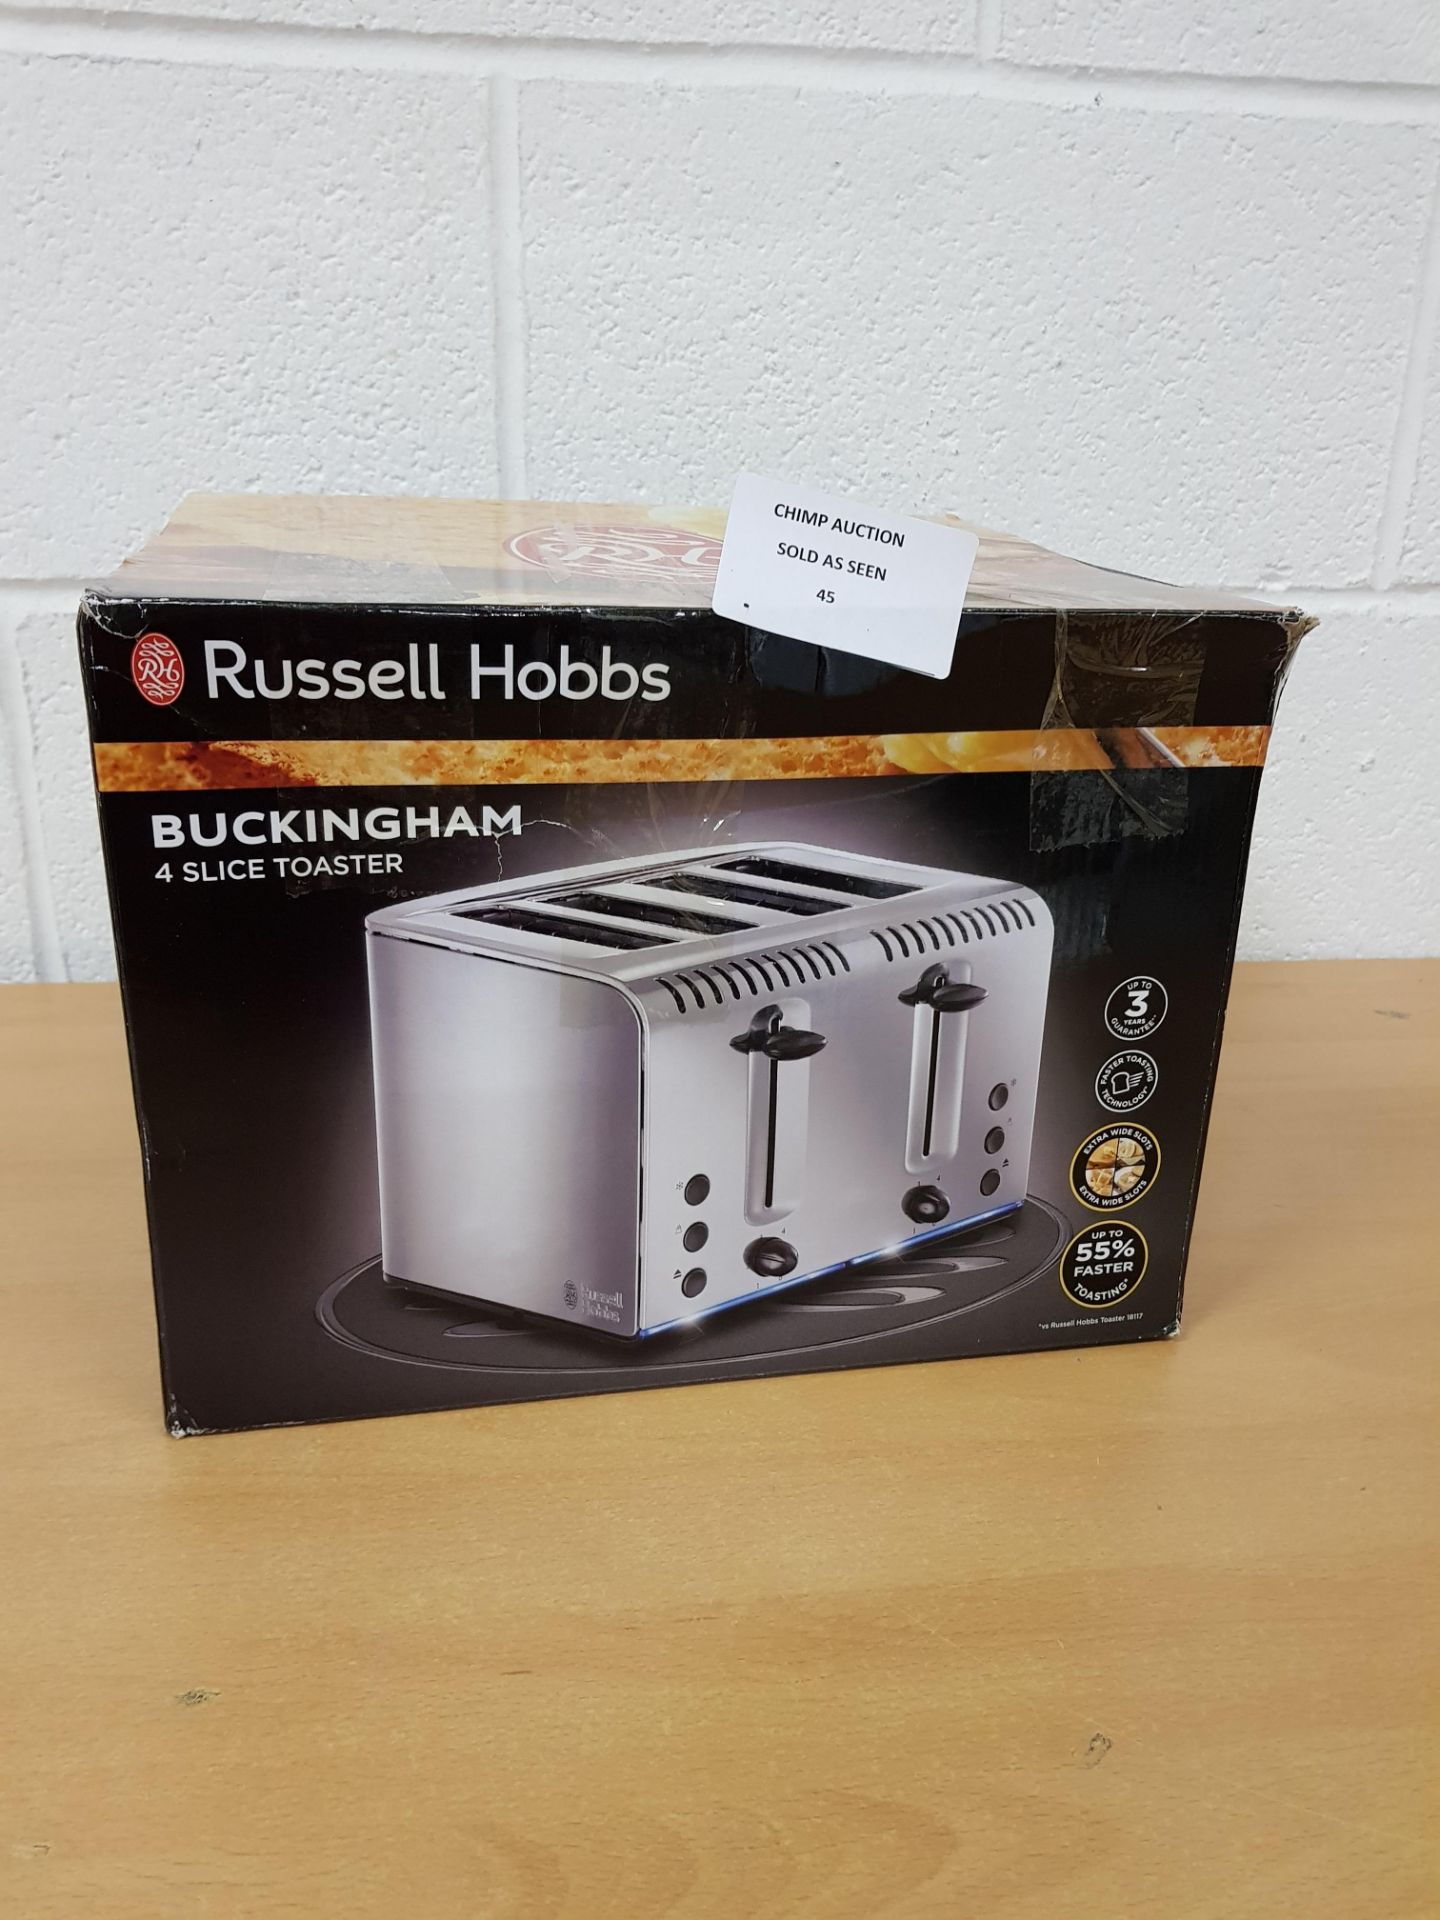 Russell Hobbs Buckingham 4 slice toaster